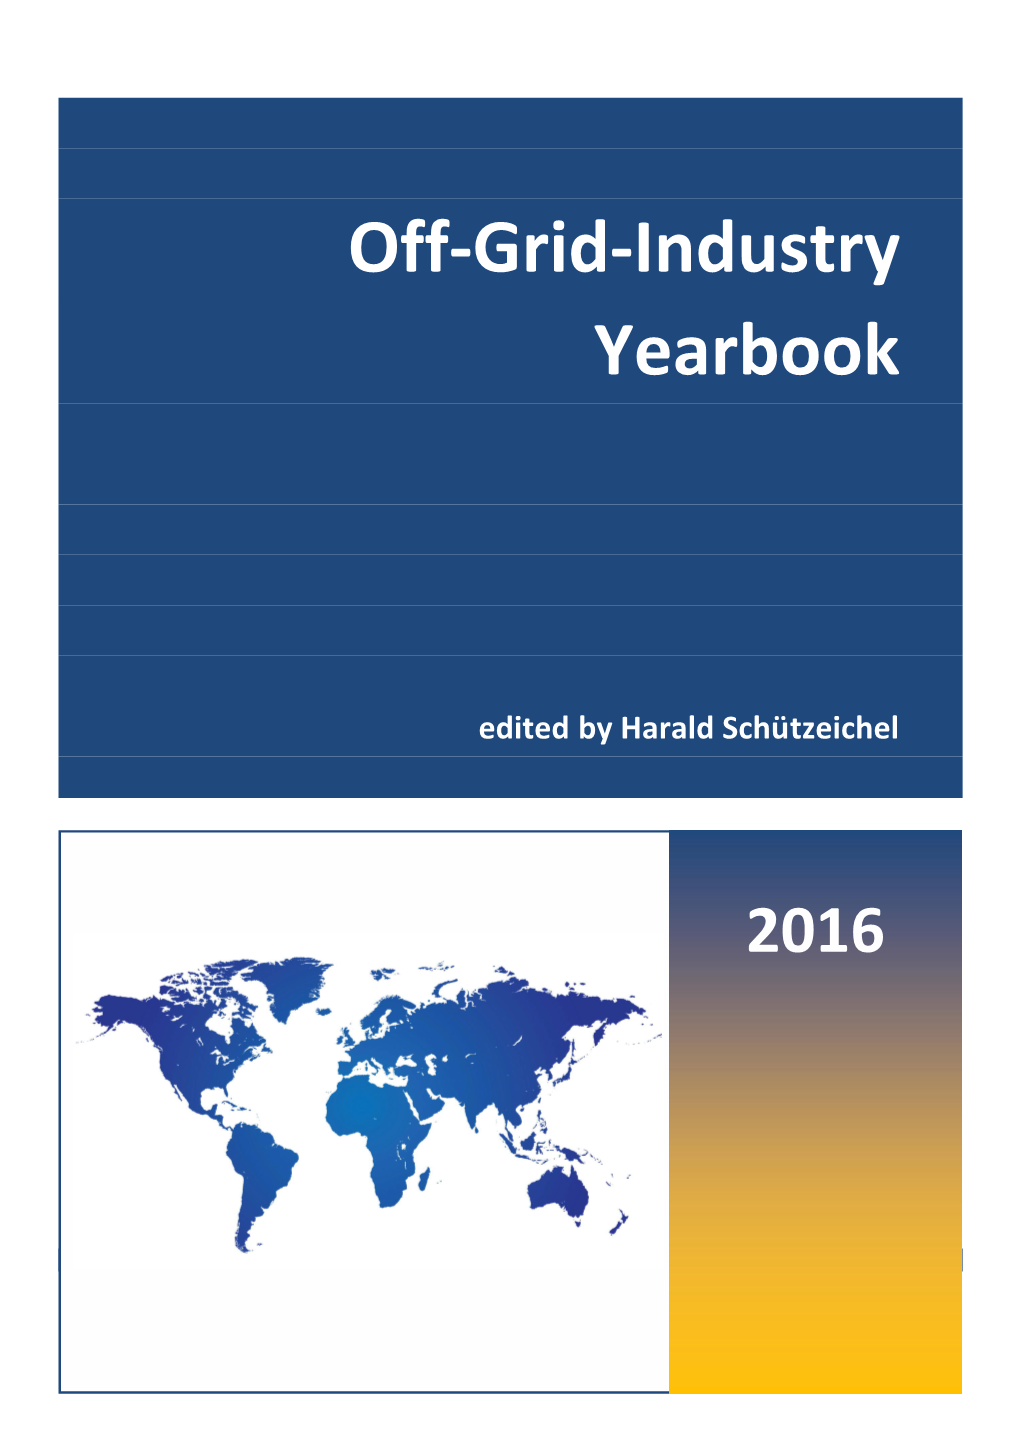 Off-Grid-Industry Yearbook